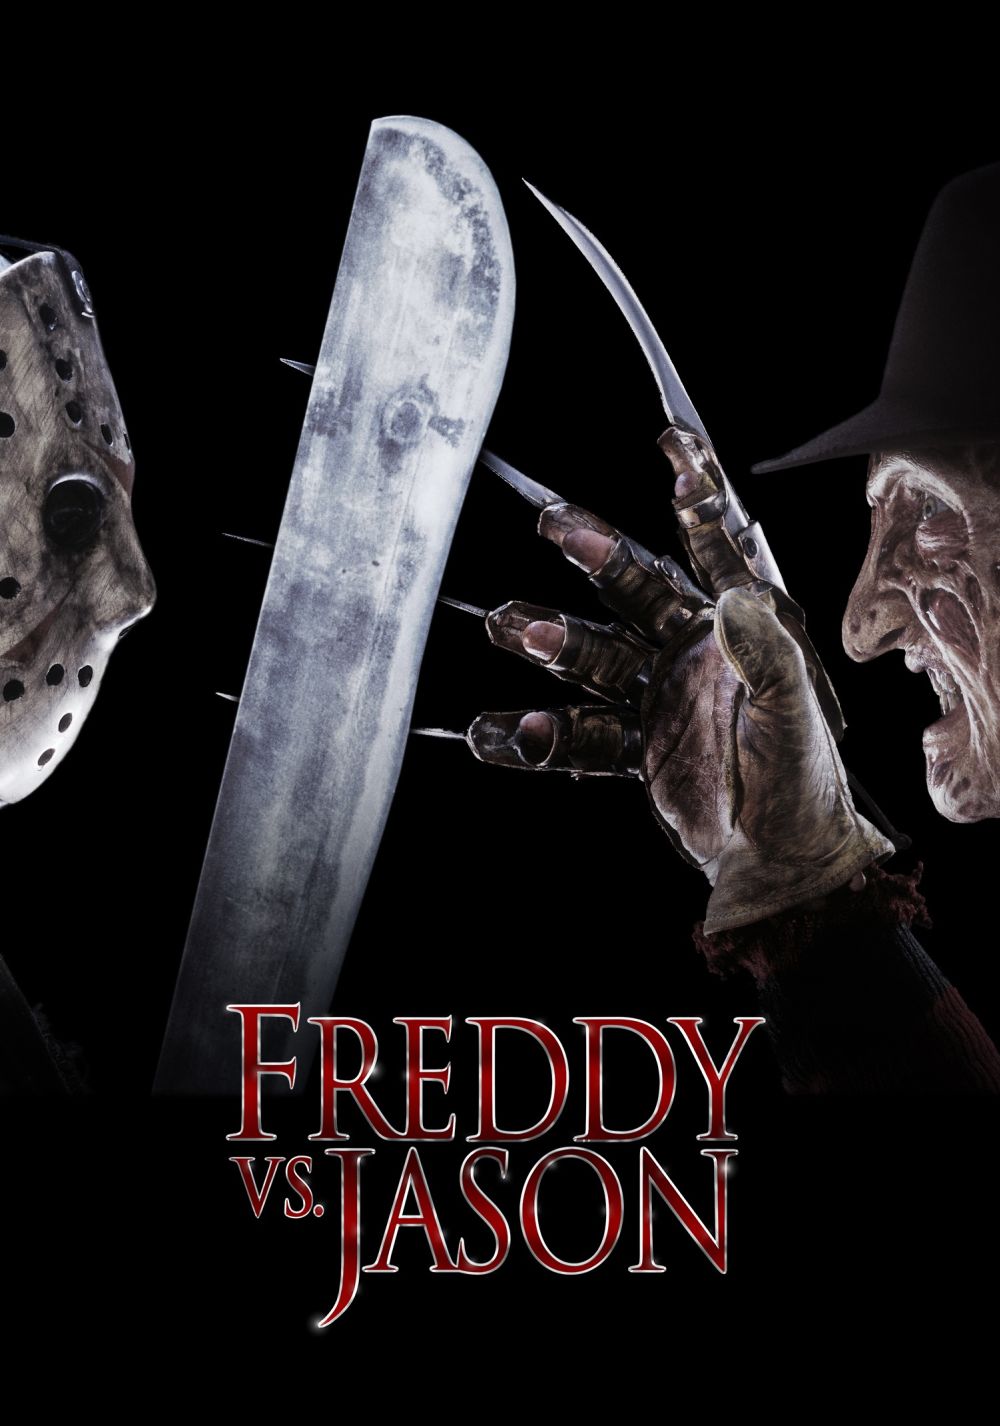 Freddy Vs Jason Poster Horror Movies Photo 41027165 Fanpop